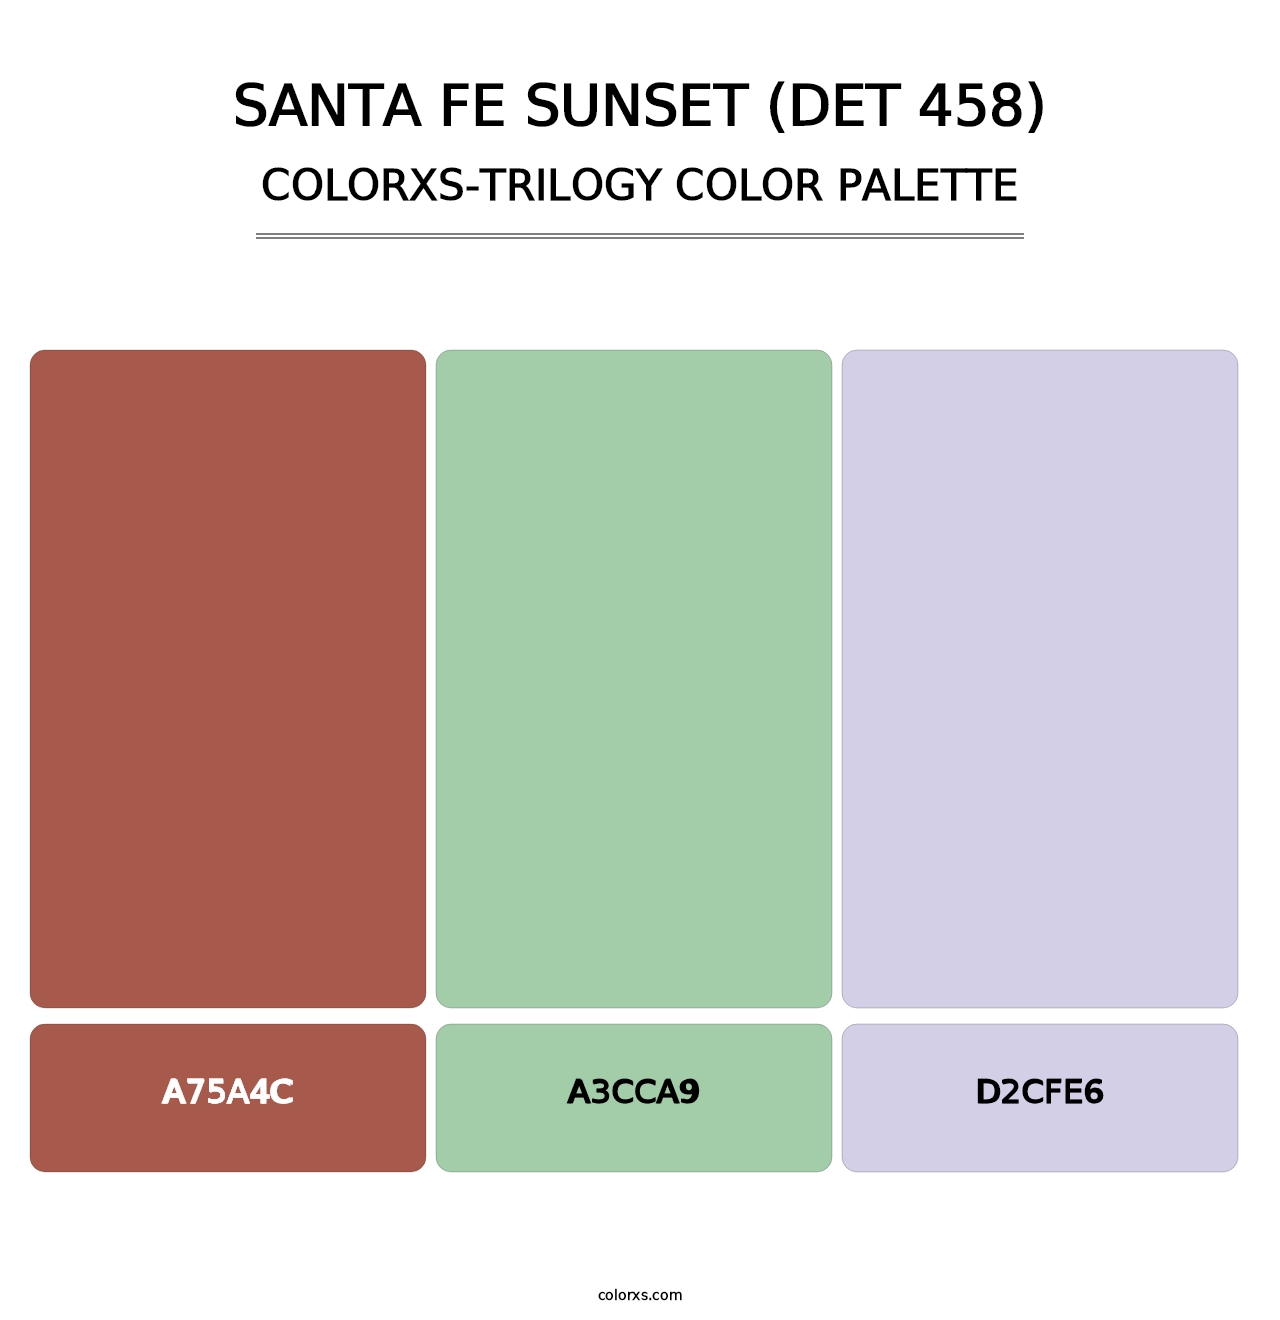 Santa Fe Sunset (DET 458) - Colorxs Trilogy Palette